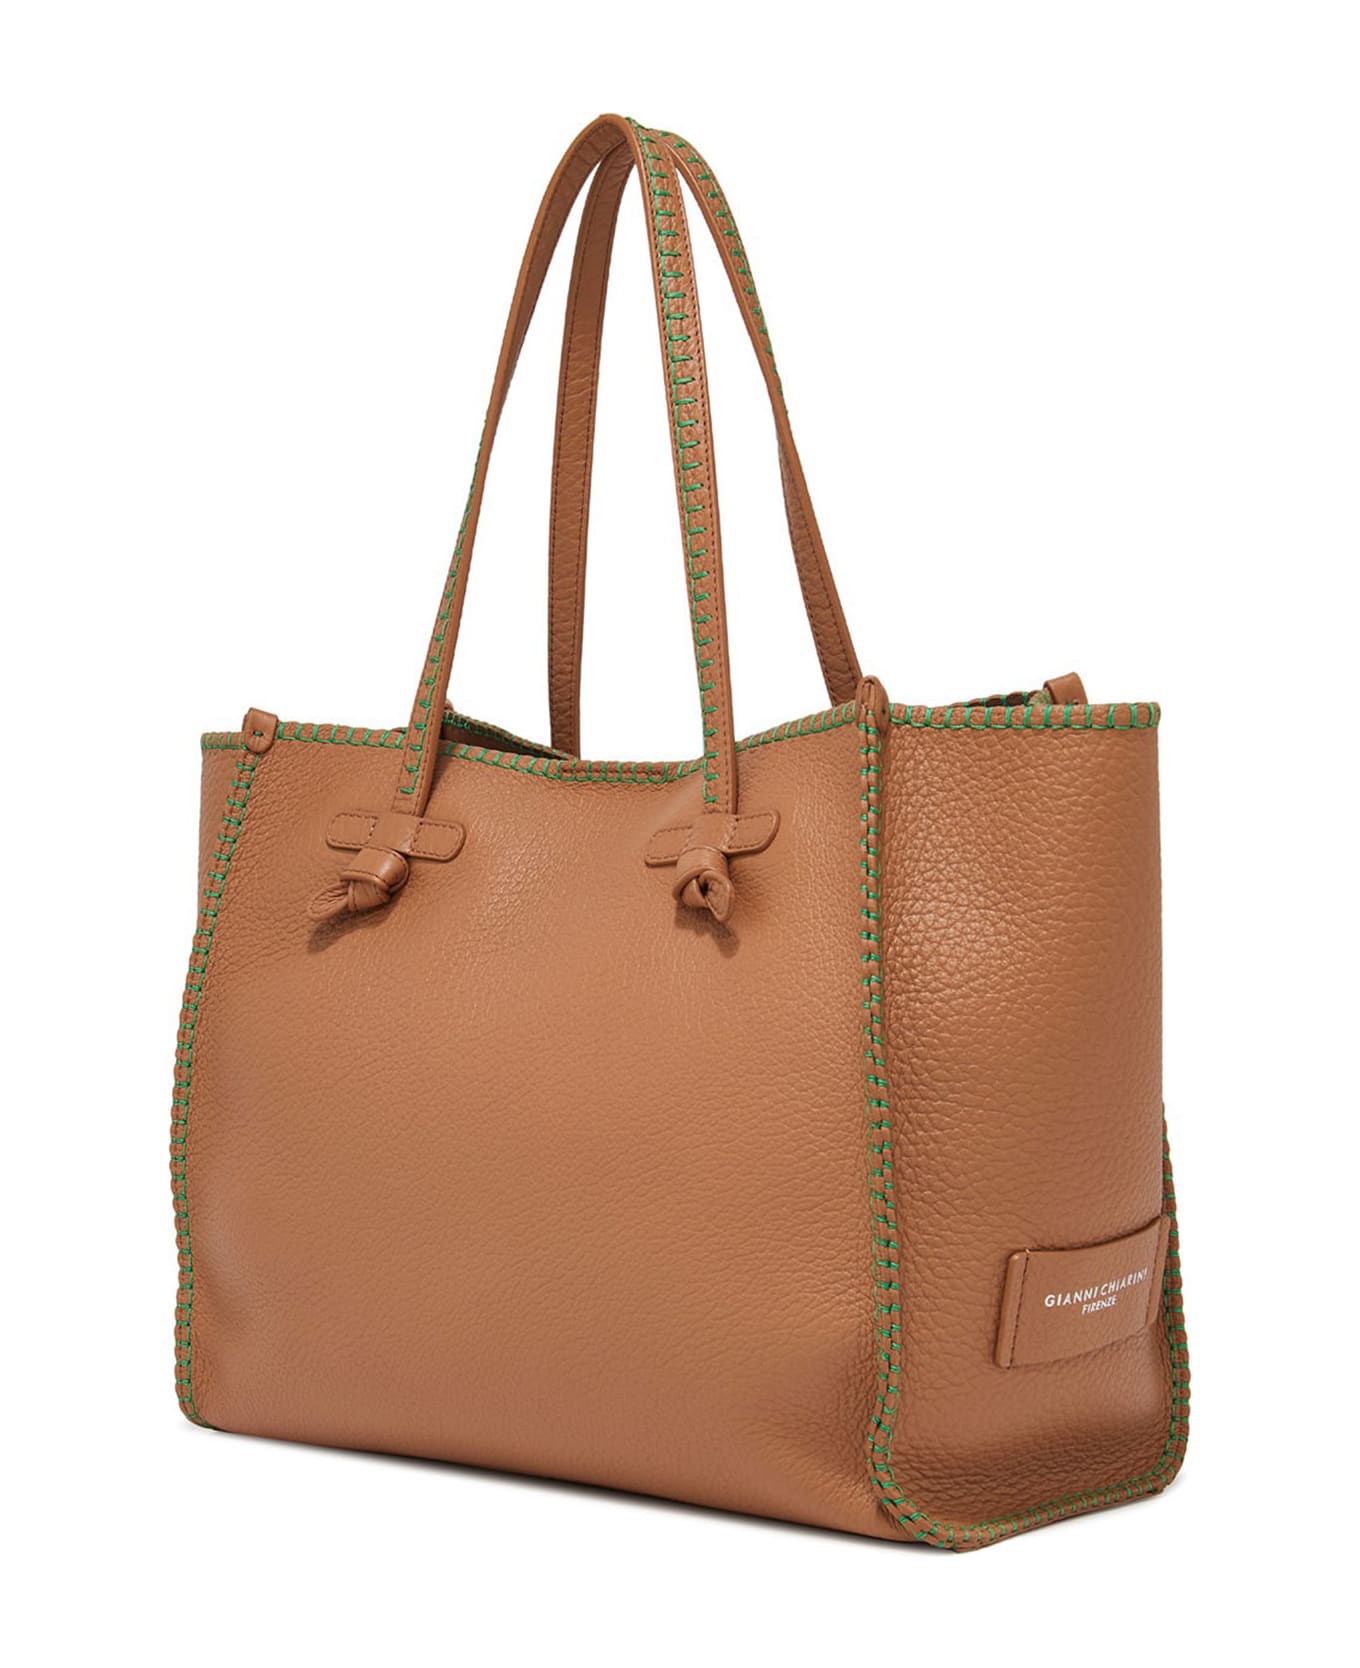 Gianni Chiarini Marcella Shopping Bag In Bubble Leather - TOFFEE